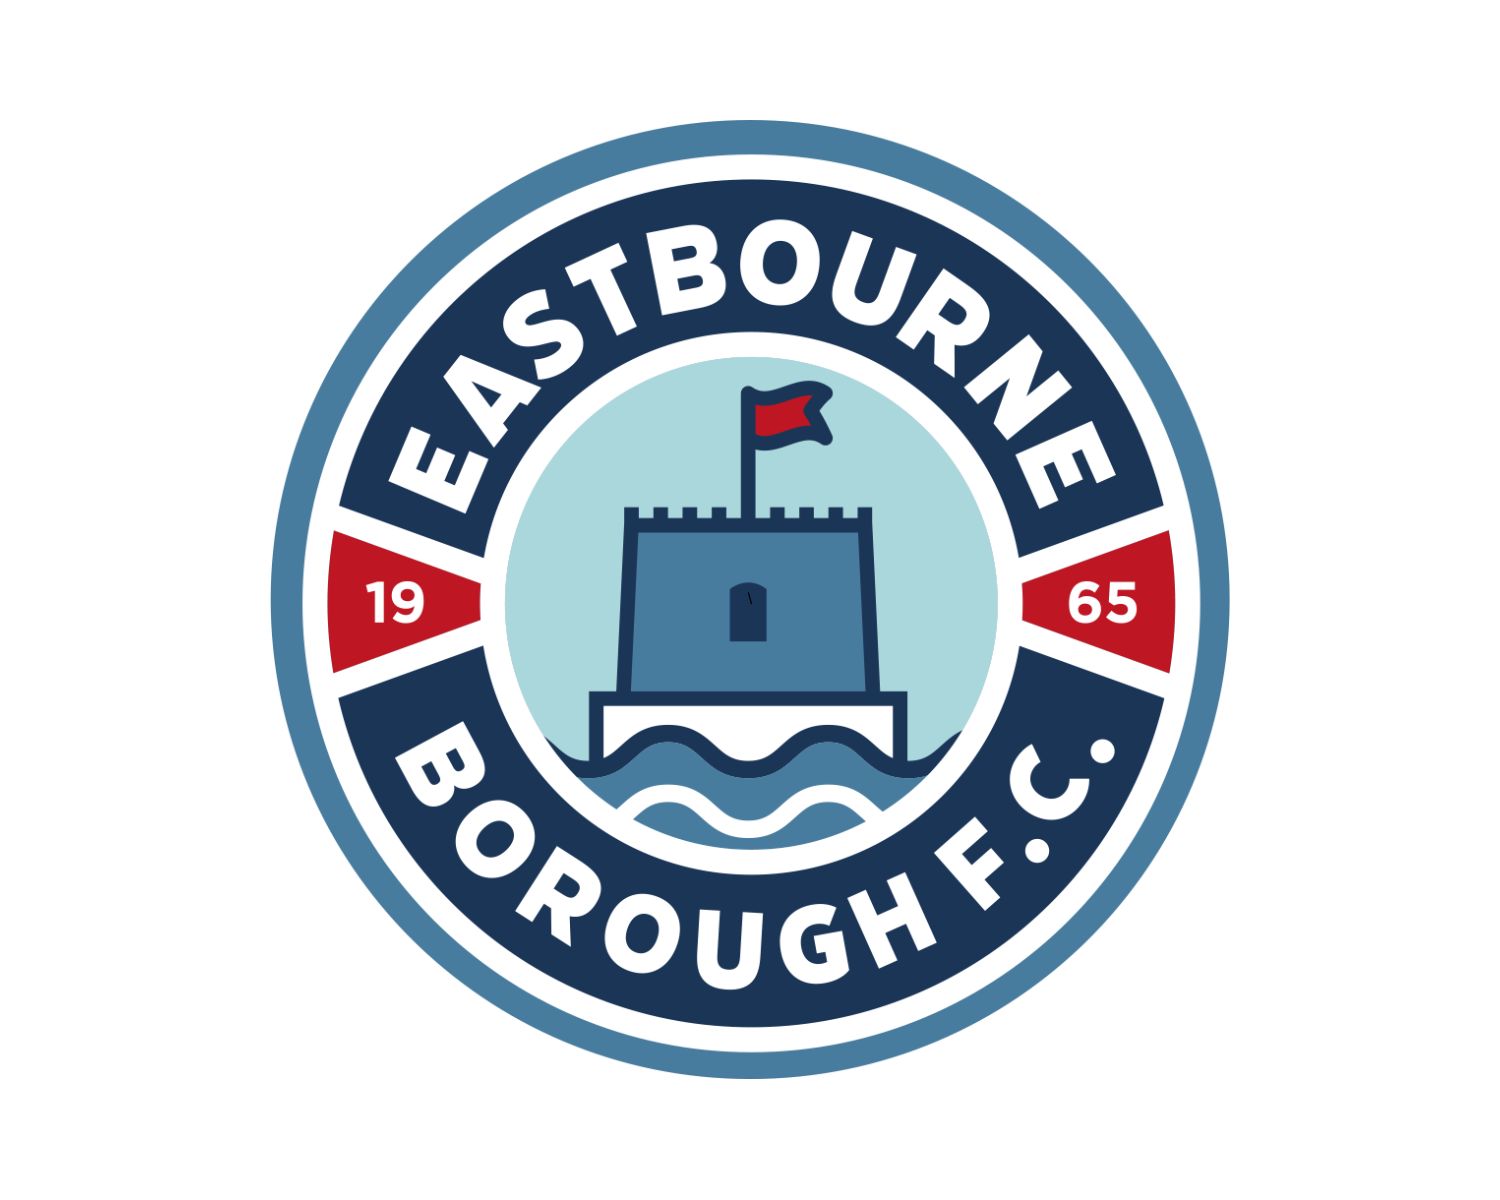 eastbourne-borough-fc-20-football-club-facts